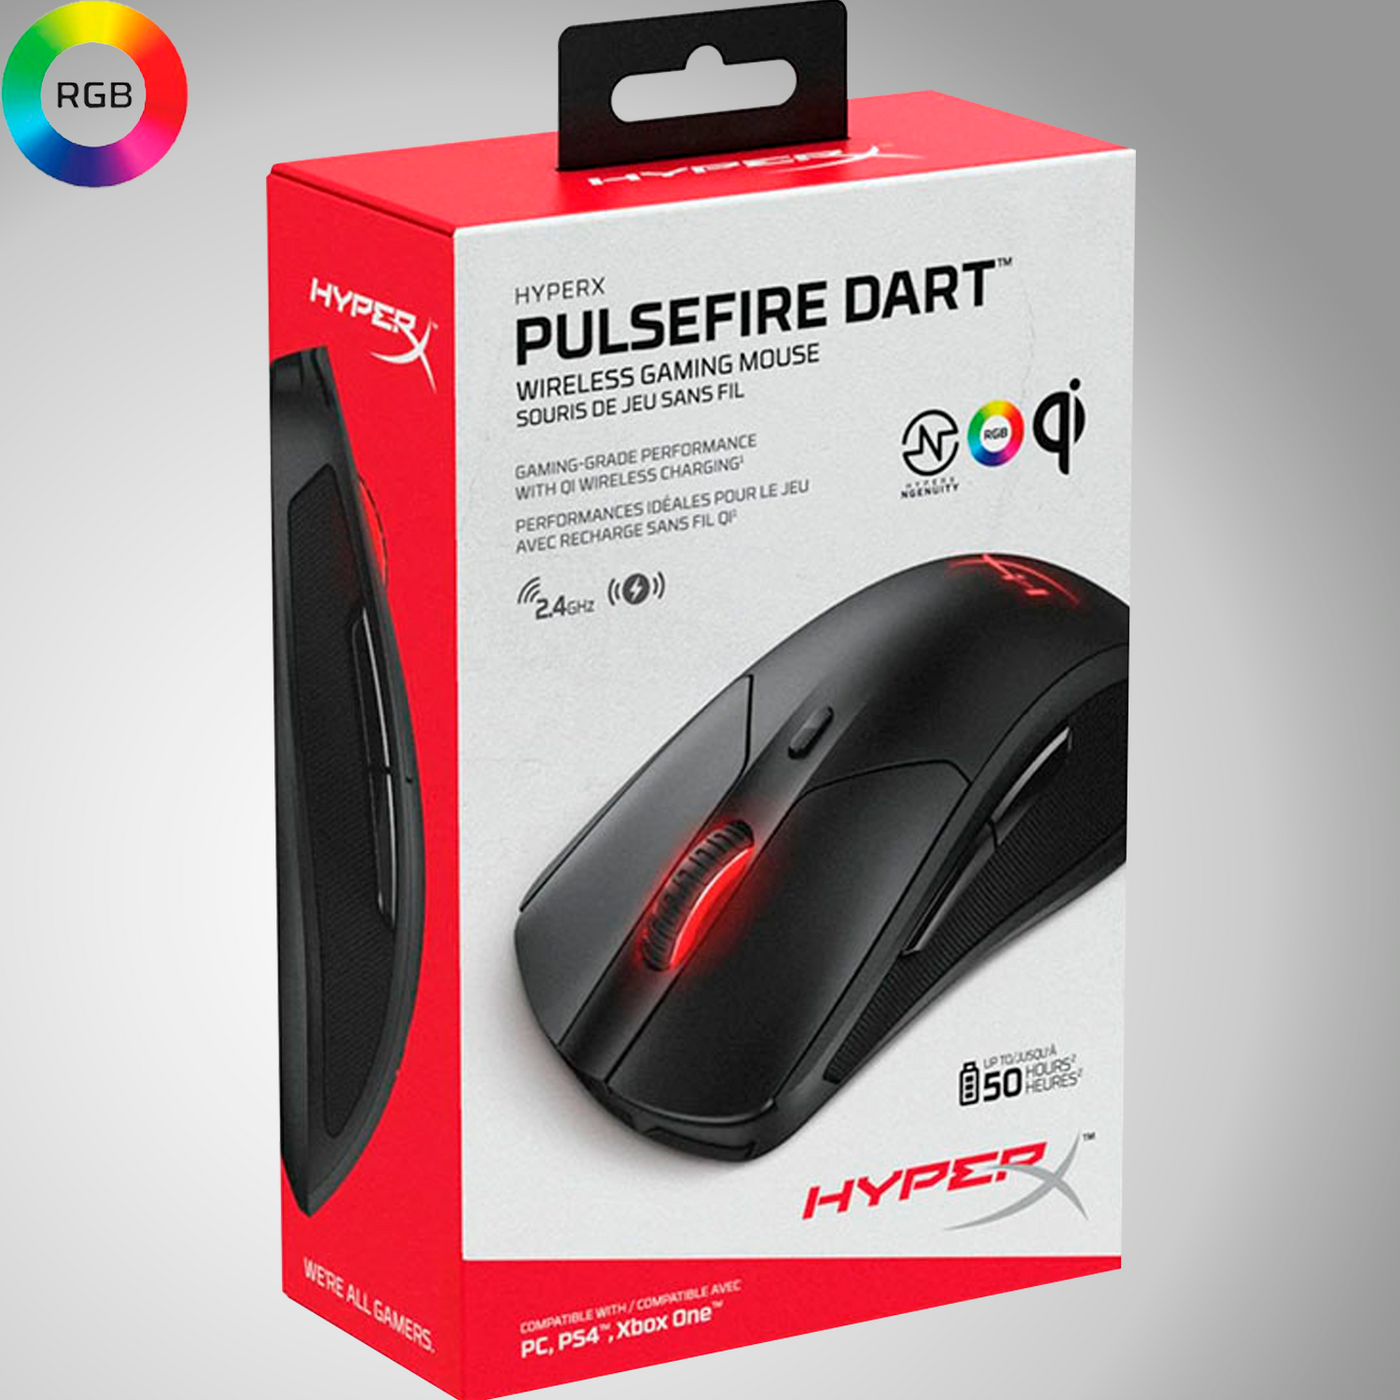 Mouse Gamer Hyperx Pulsefire Dart Wireless Qi Certified Rgb